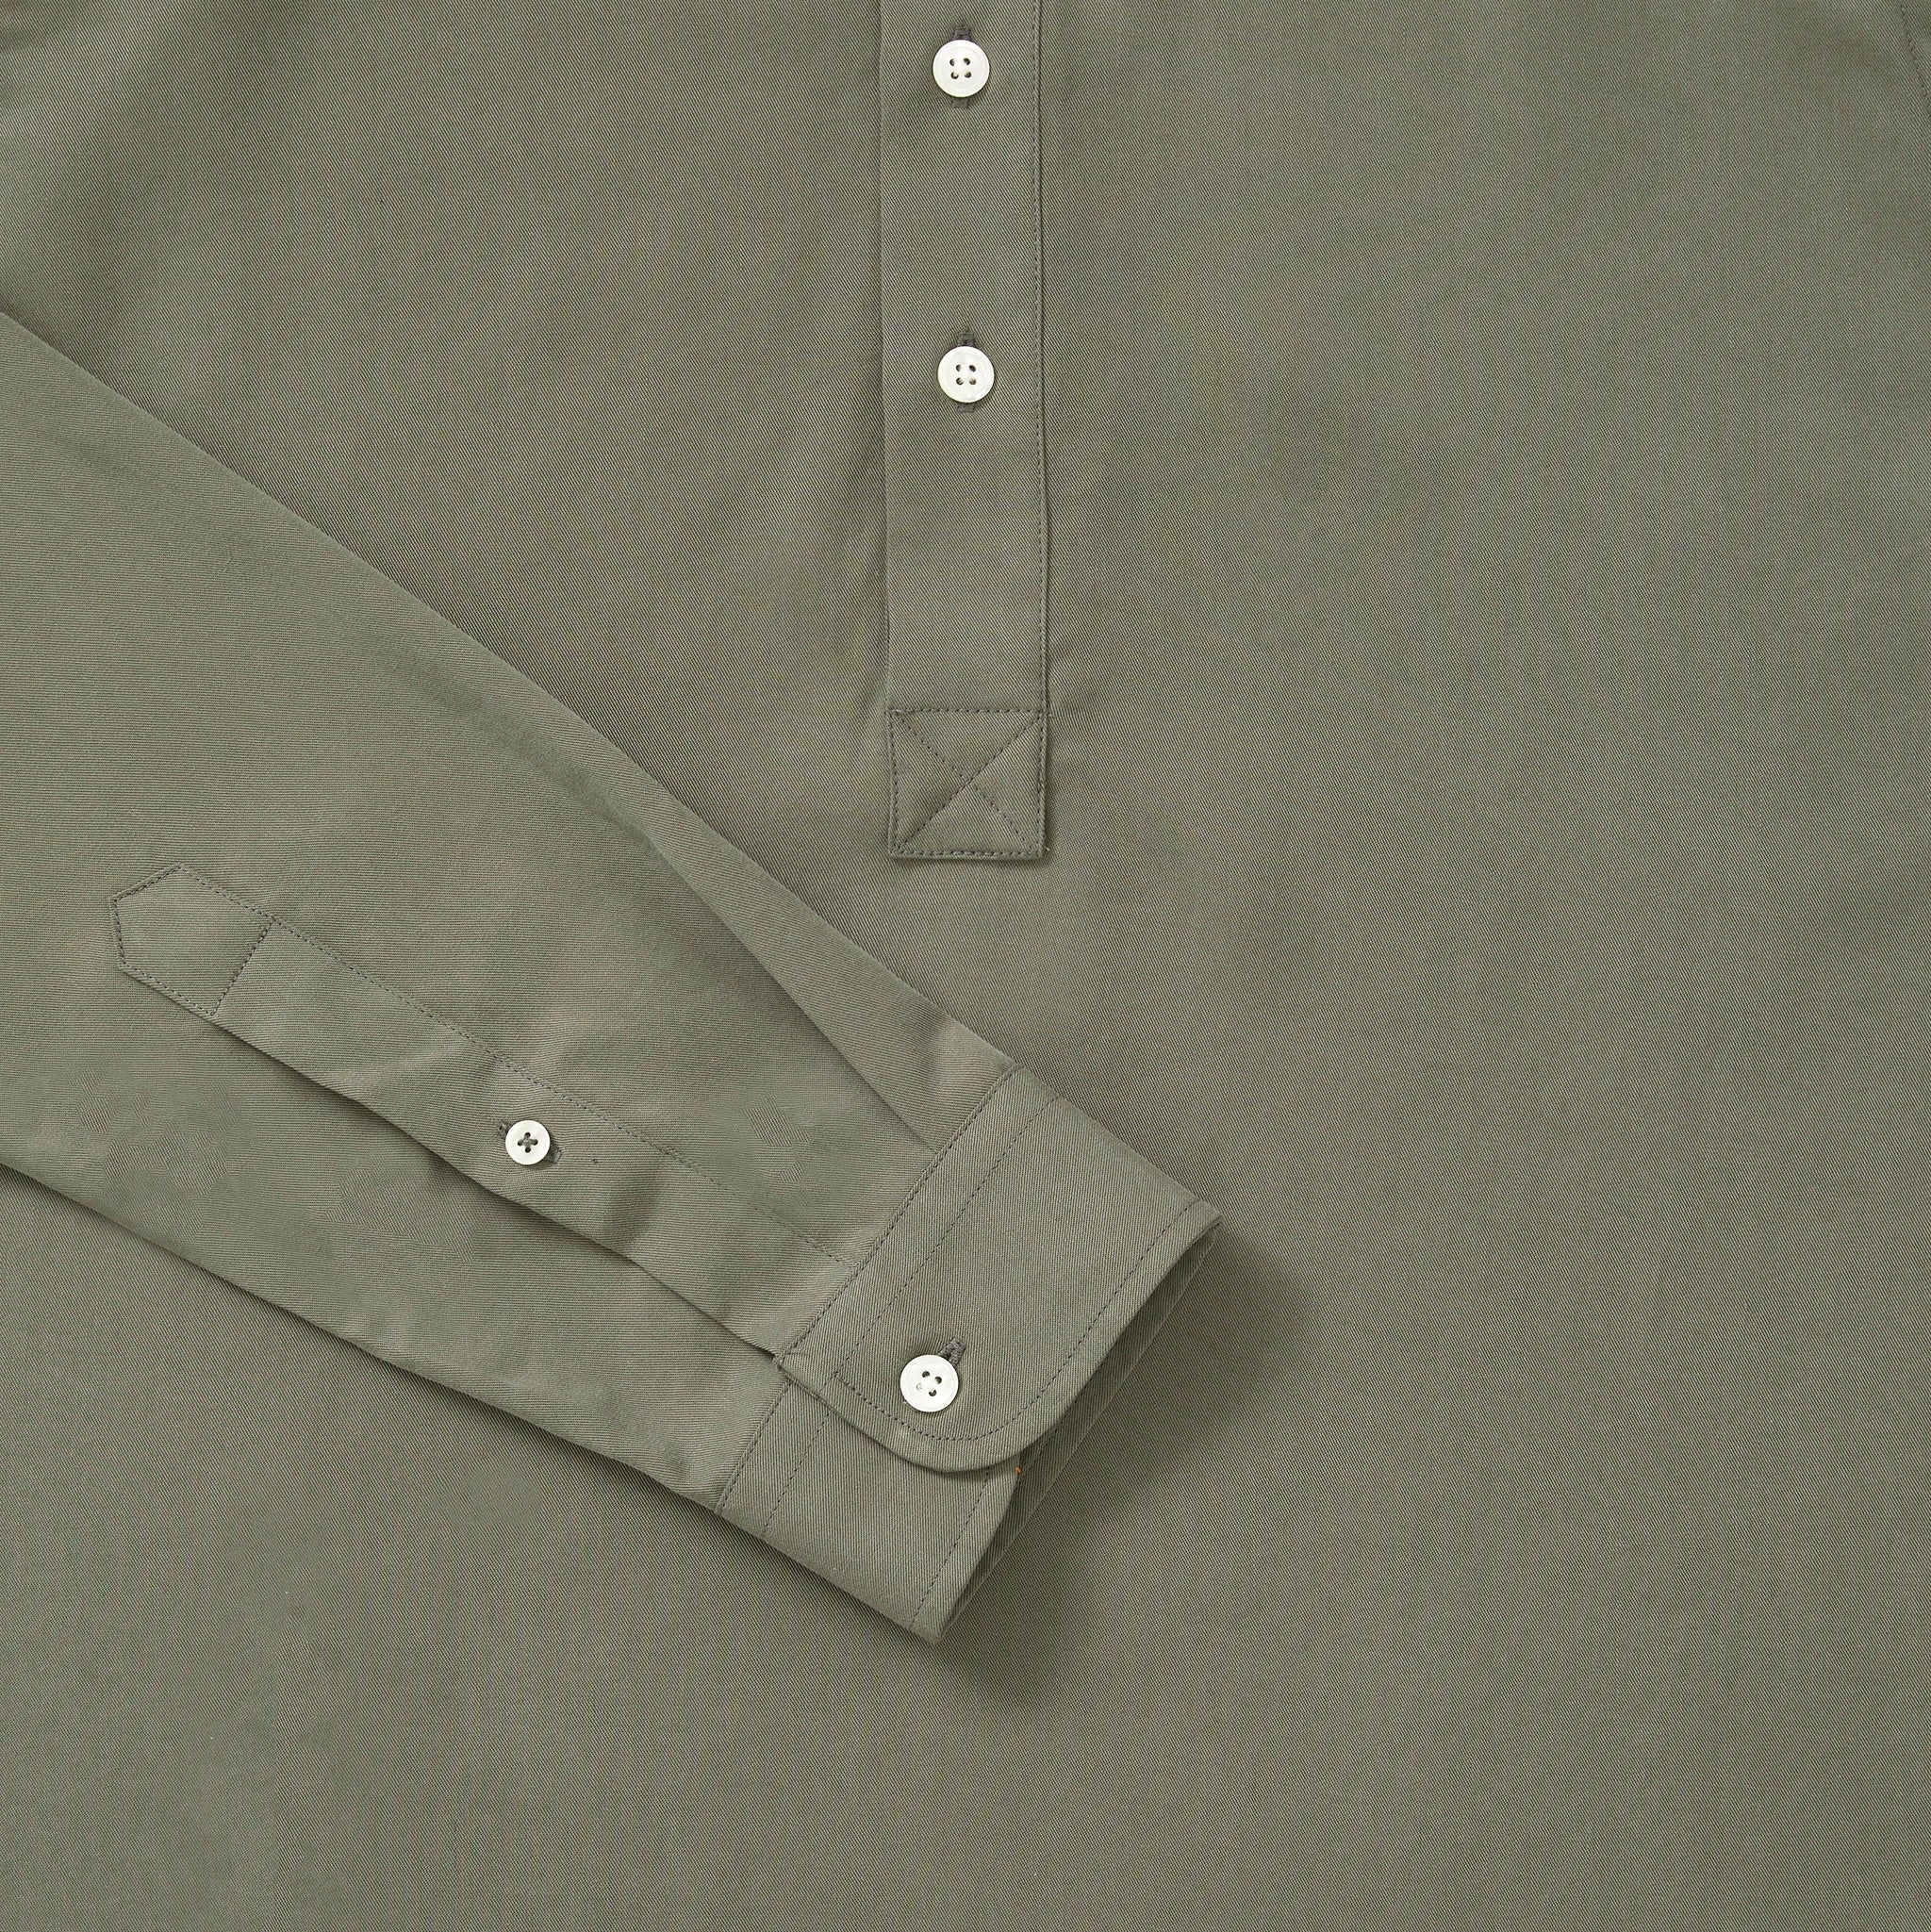 Fitz & Fro Tencel Popover Shirt - Khaki Green